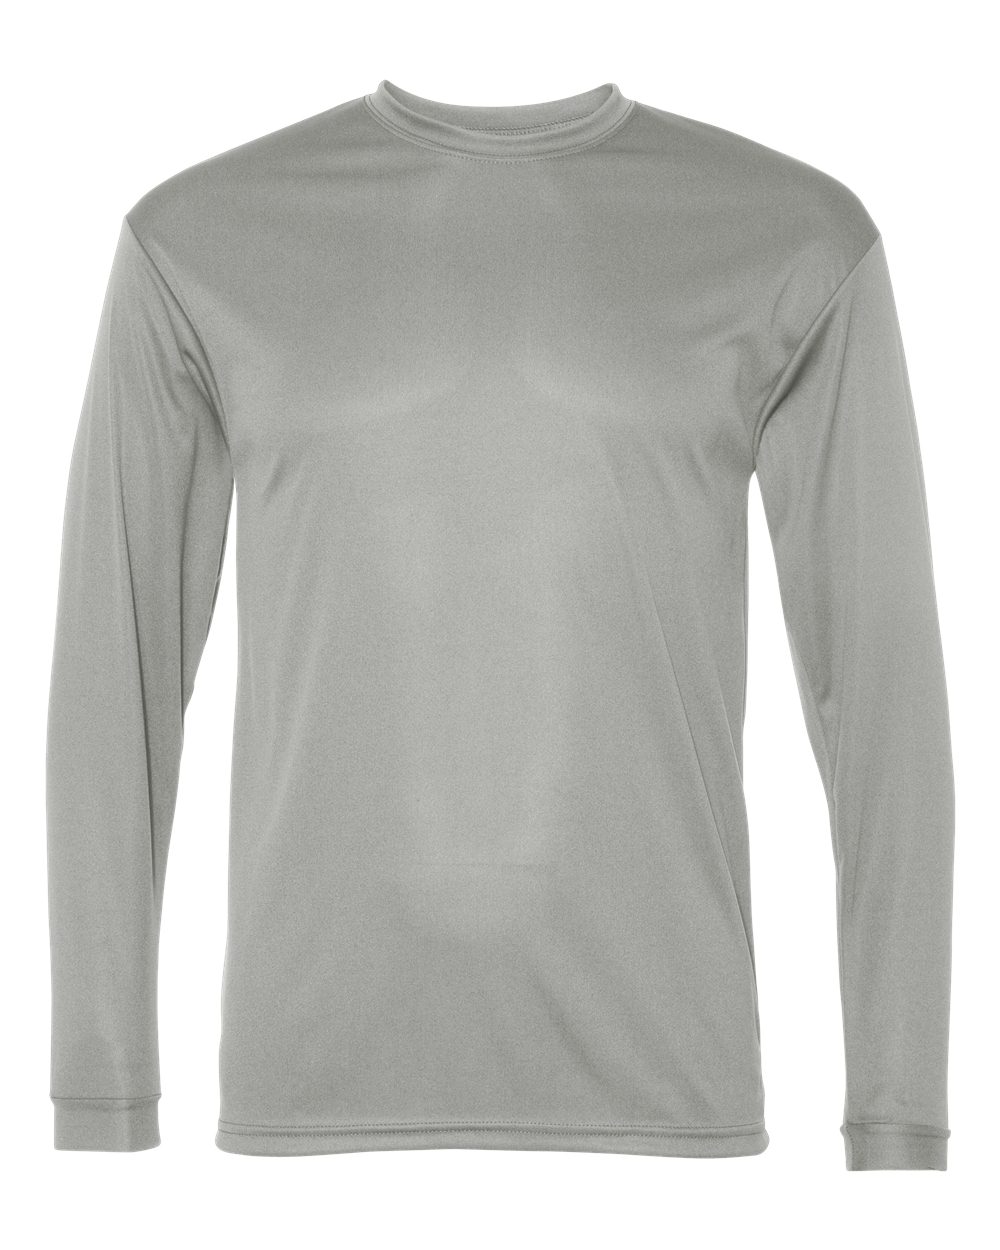 C2 Sport - Performance Long Sleeve T-Shirt - 5104, Dri Fit